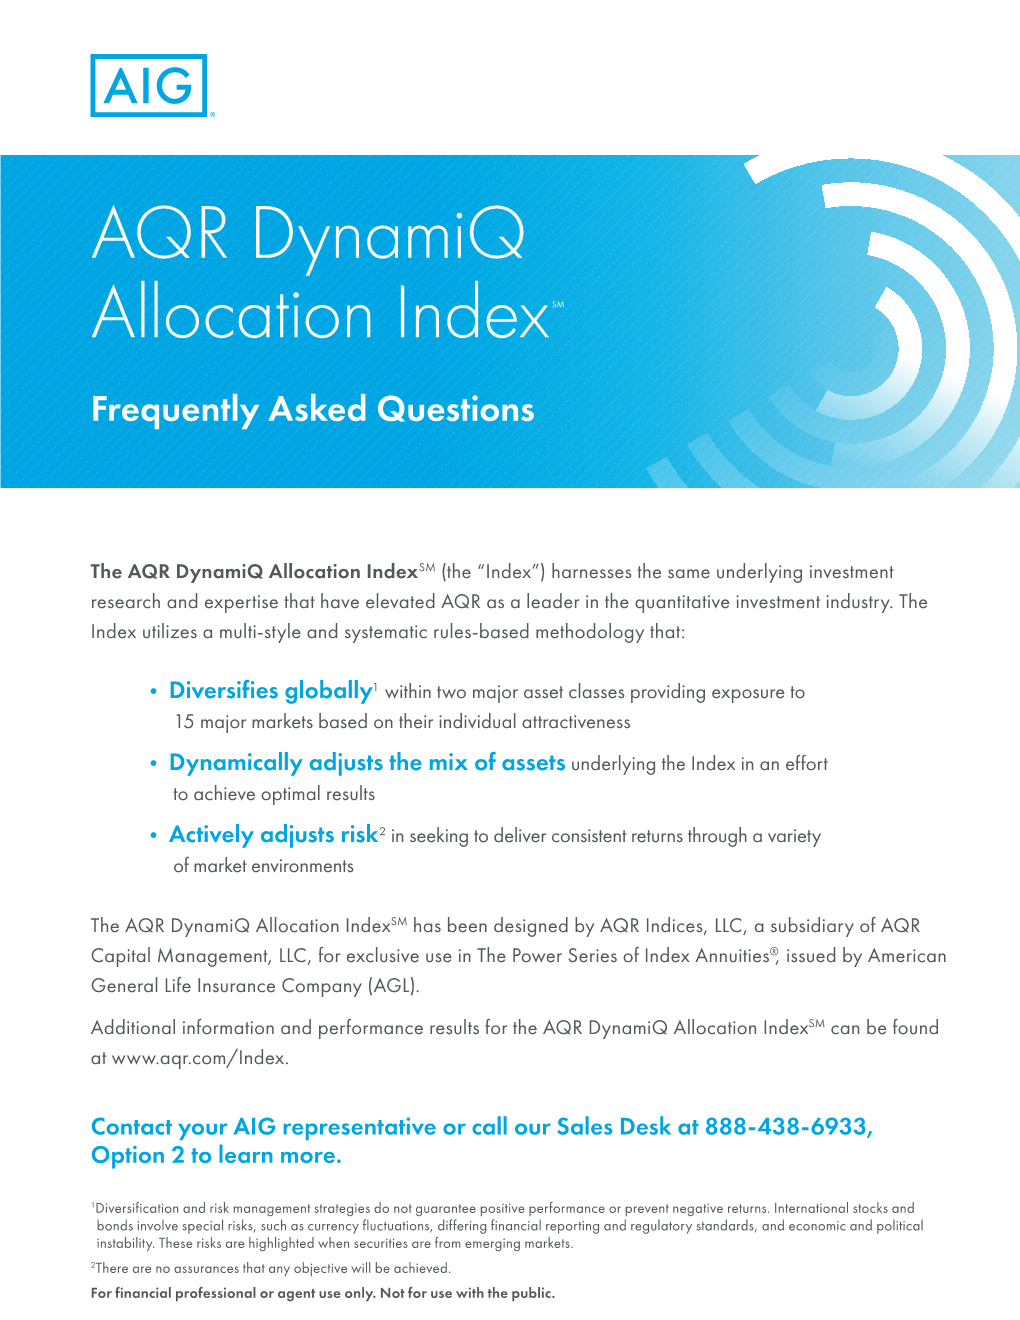 AQR Dynamiq Allocation Indexsm